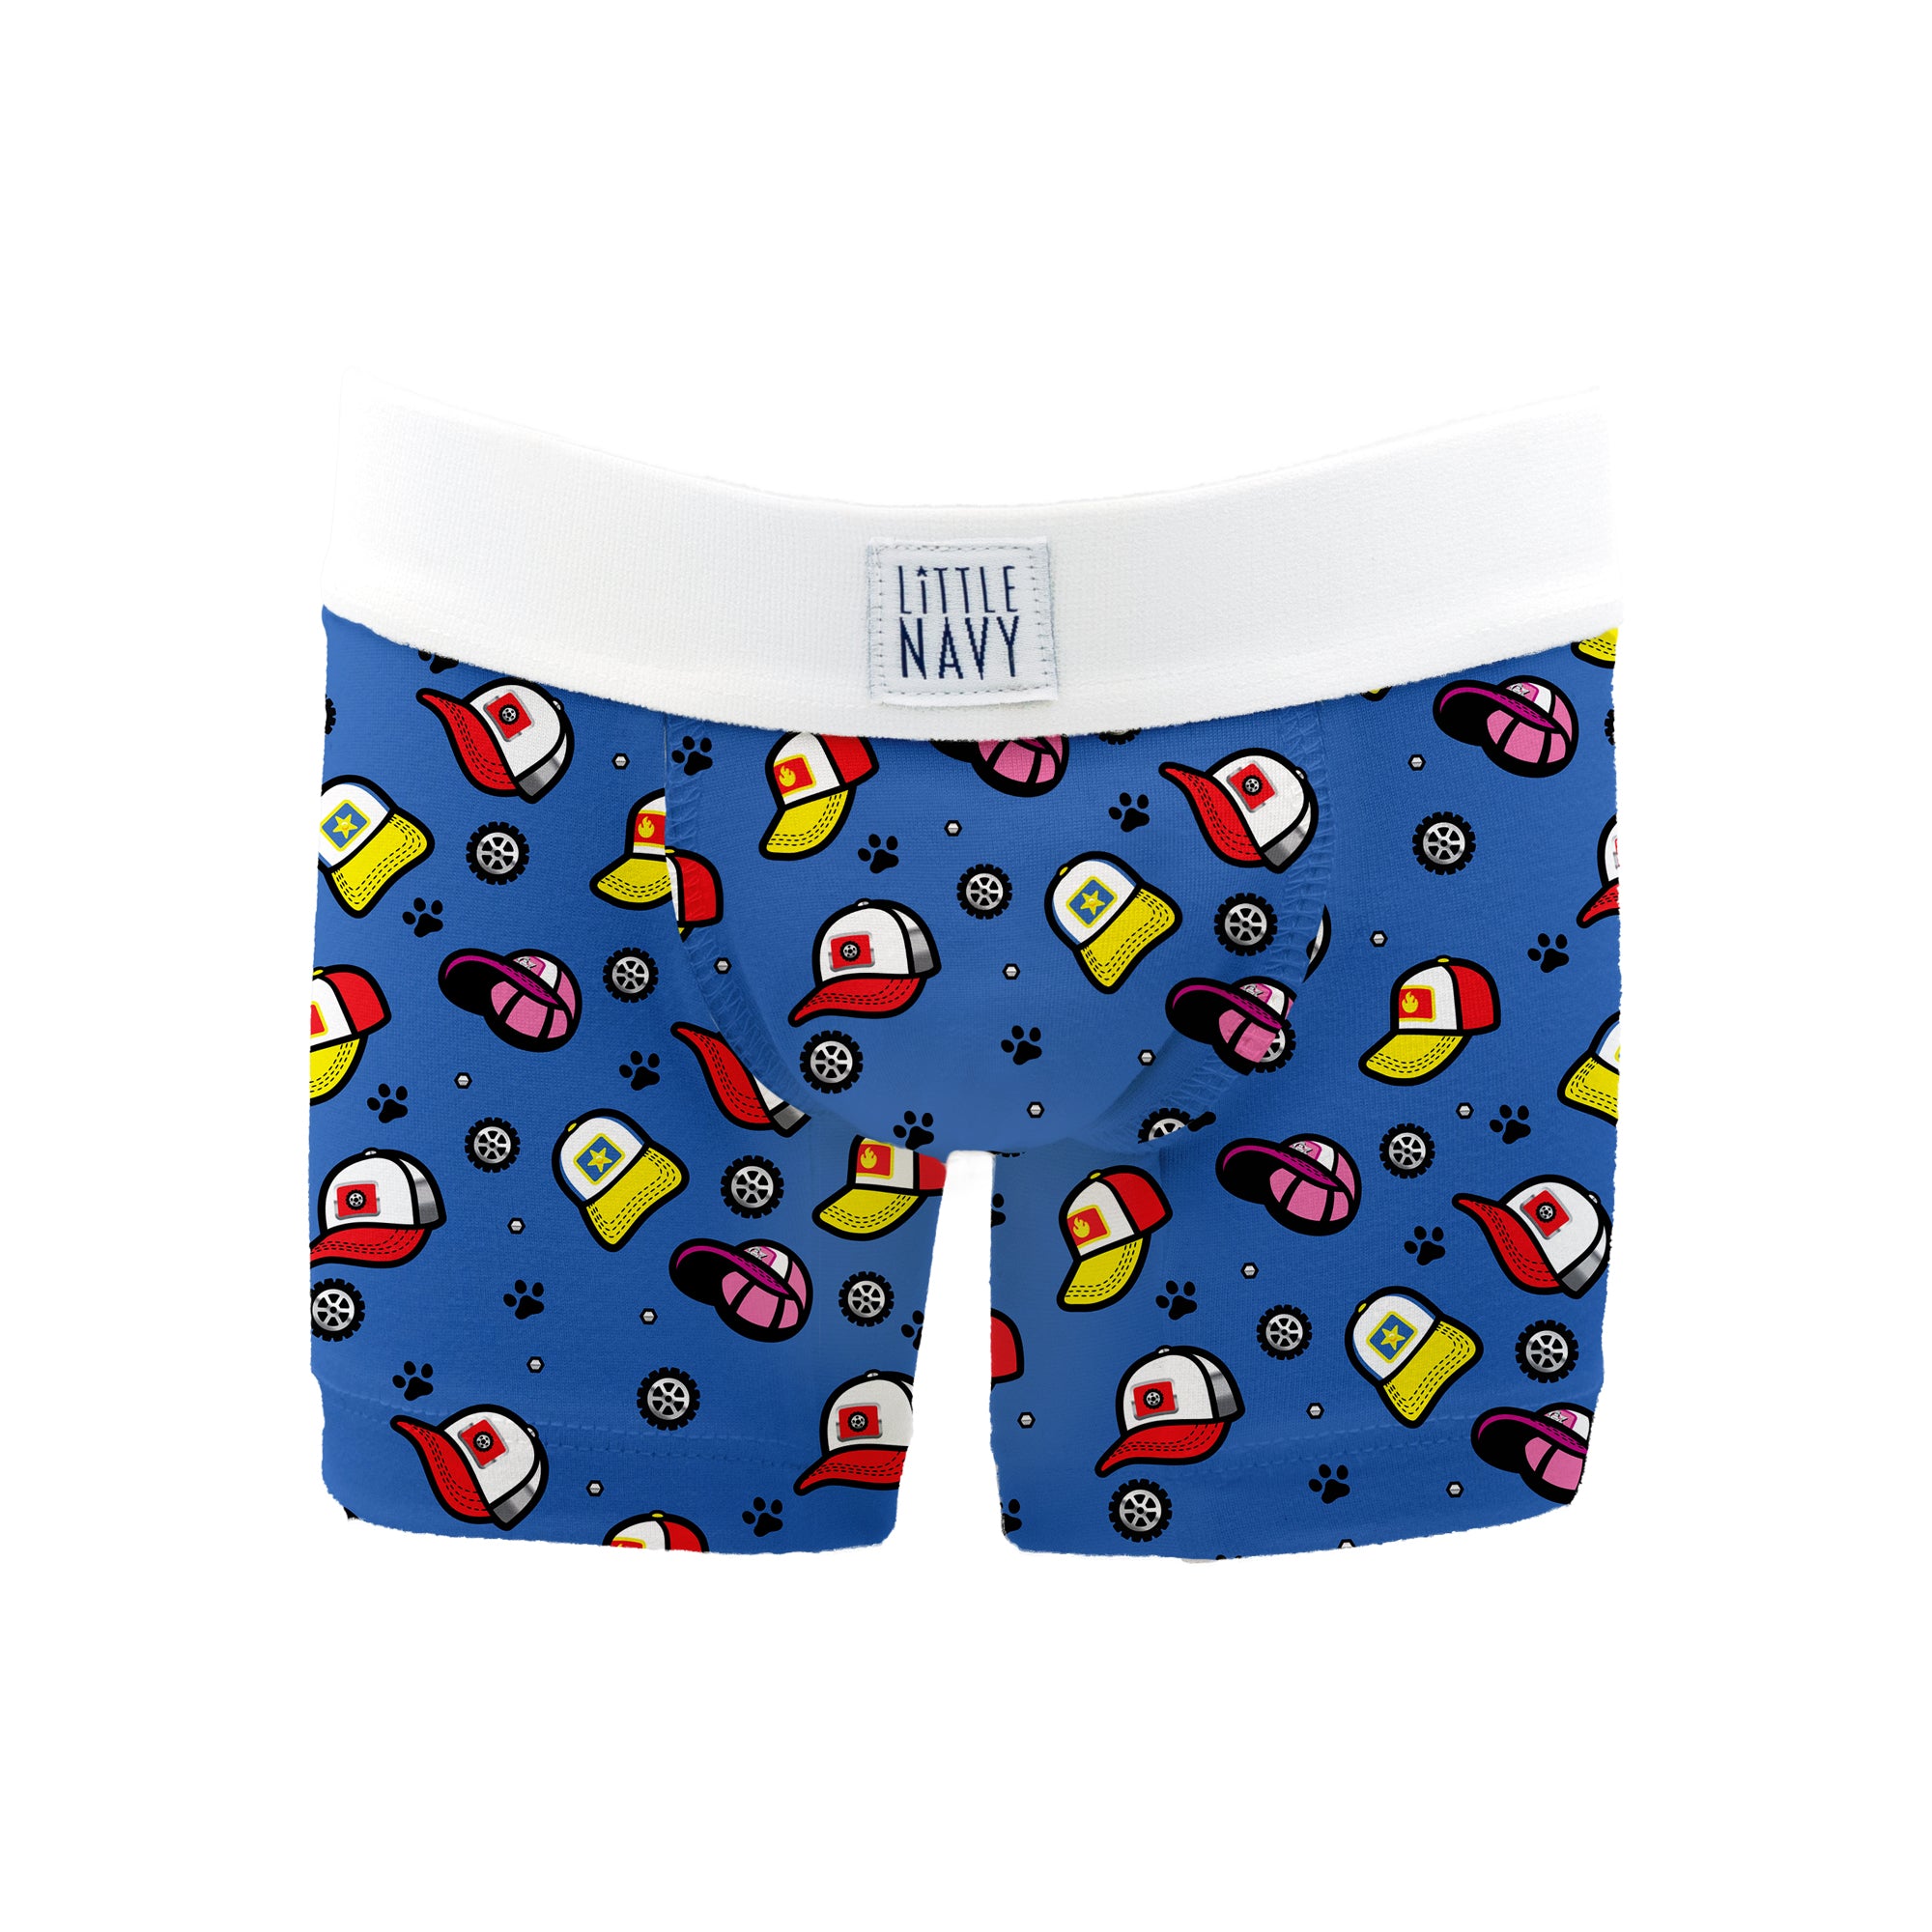 6 pack of 4T Toddler Boys PAW PATROL Underwear Briefs - Size 4T